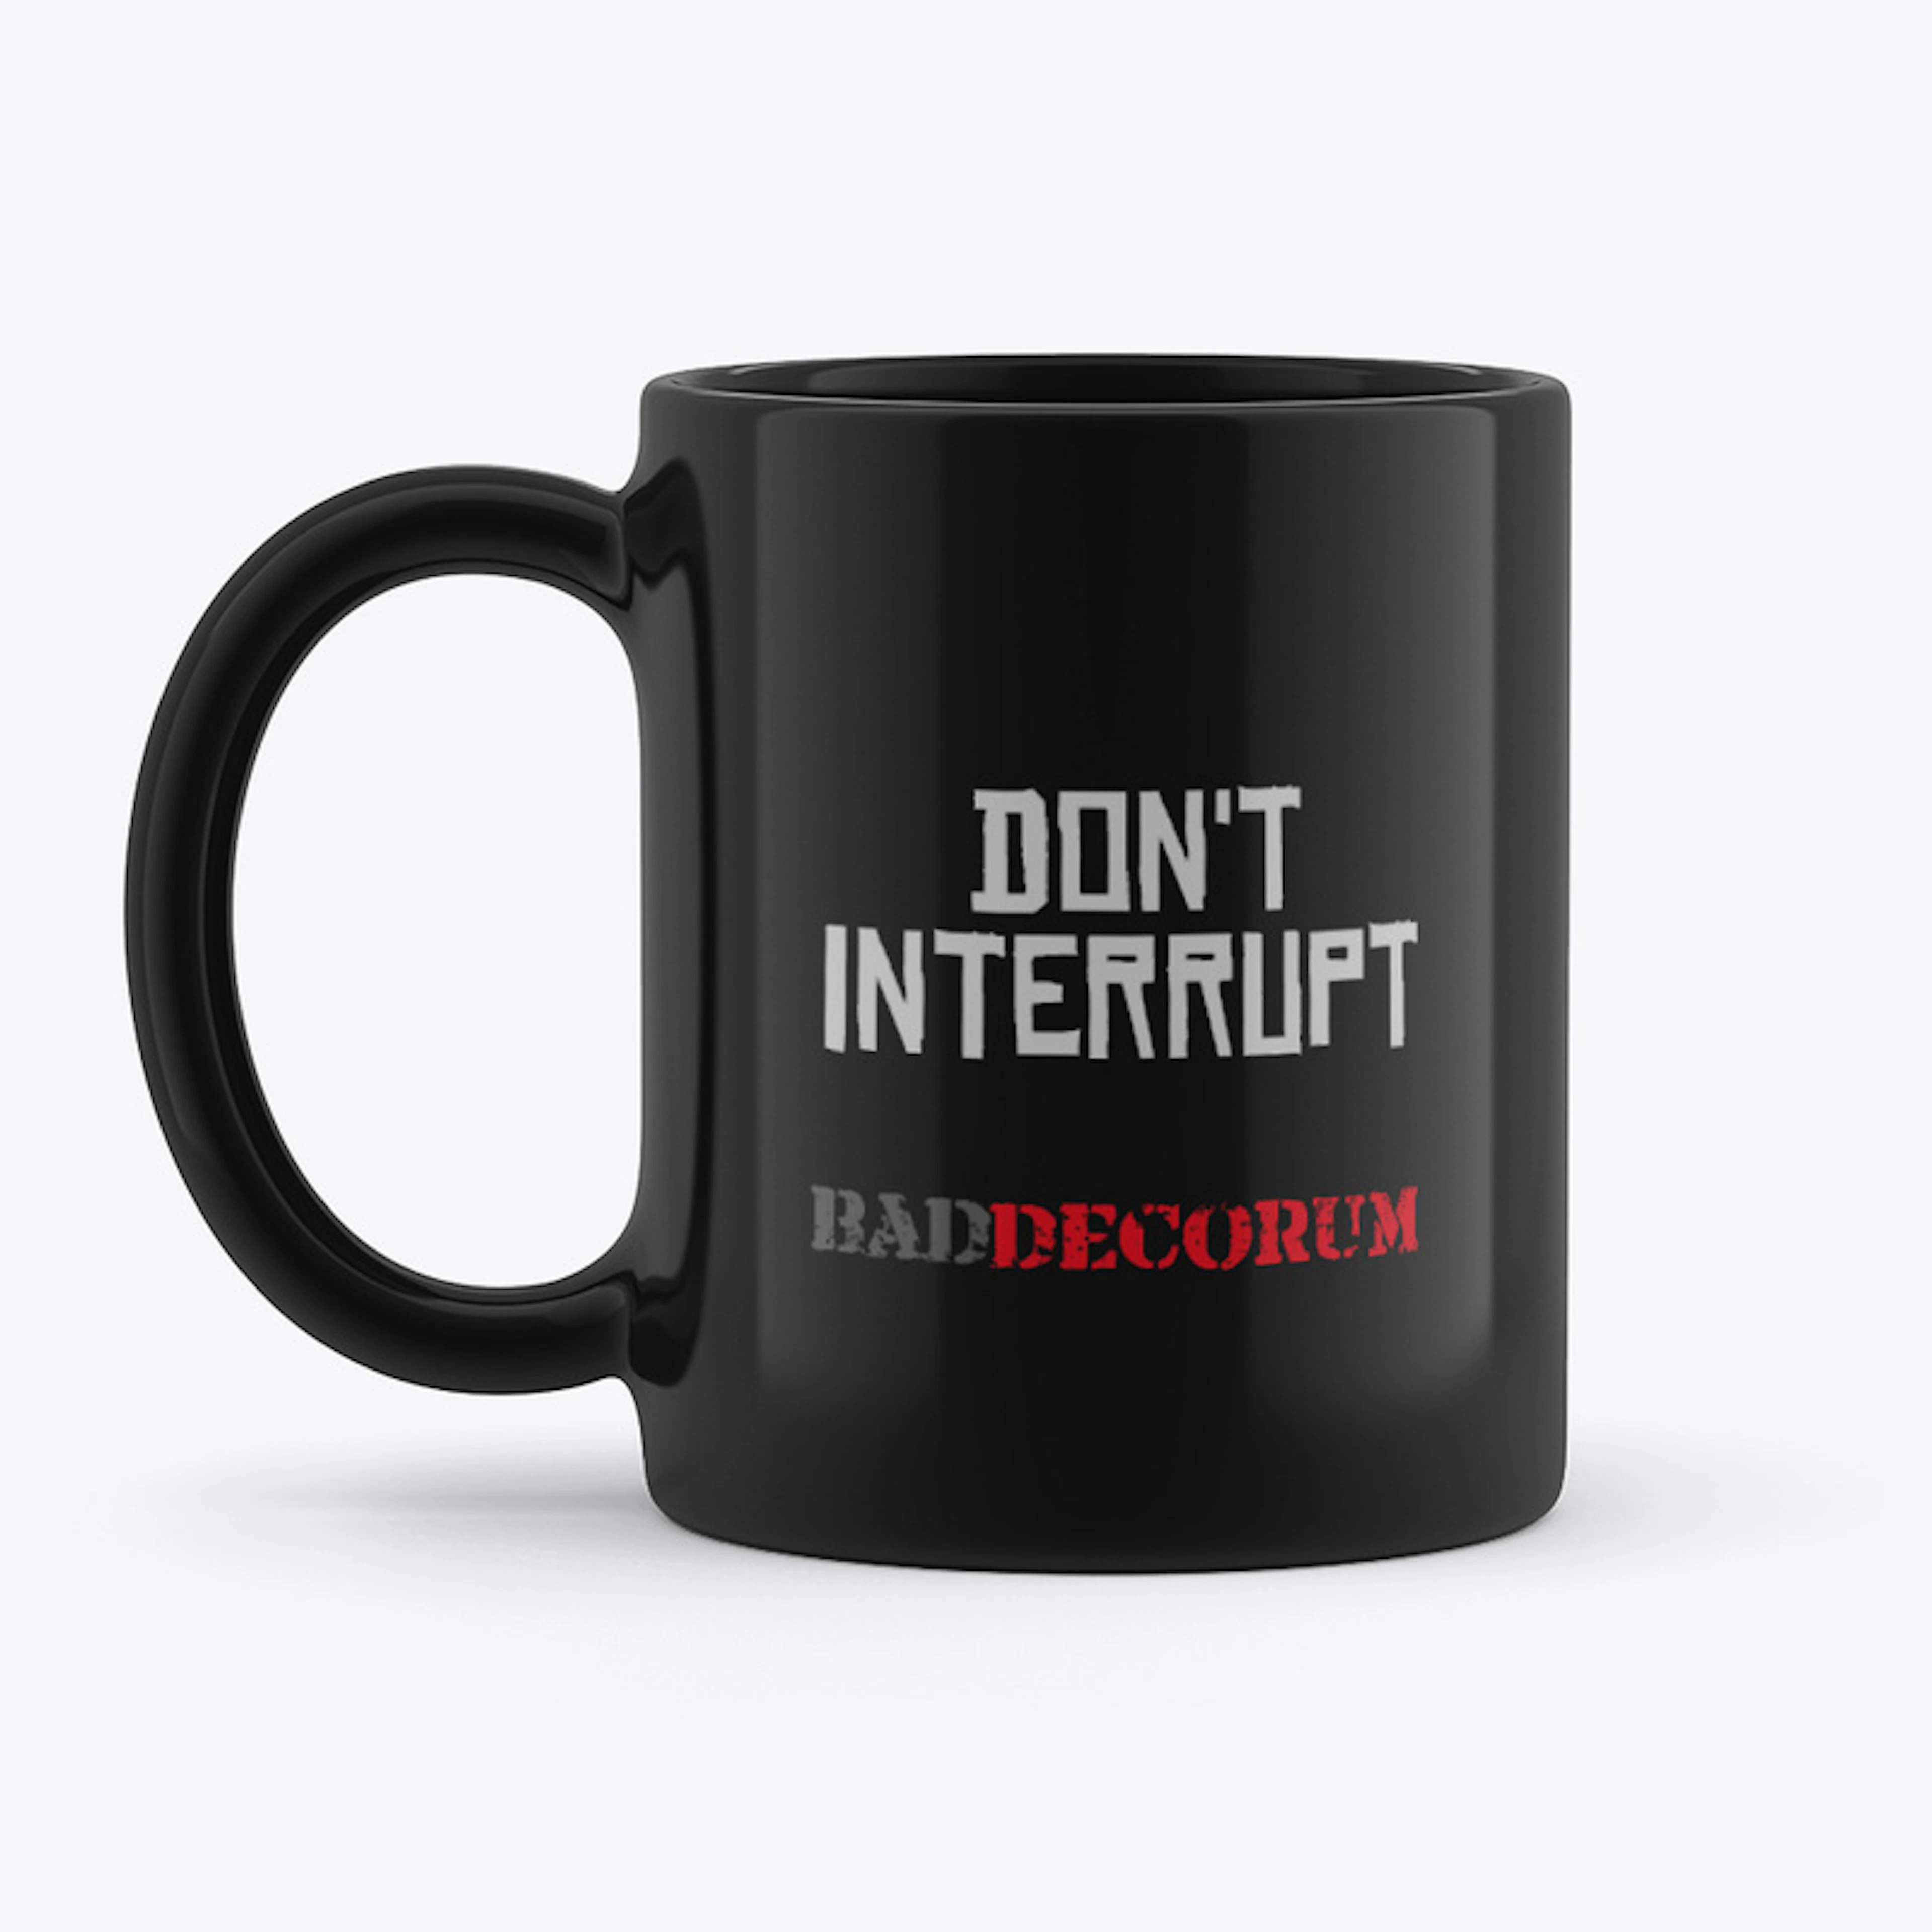 Don't Interrupt Mug